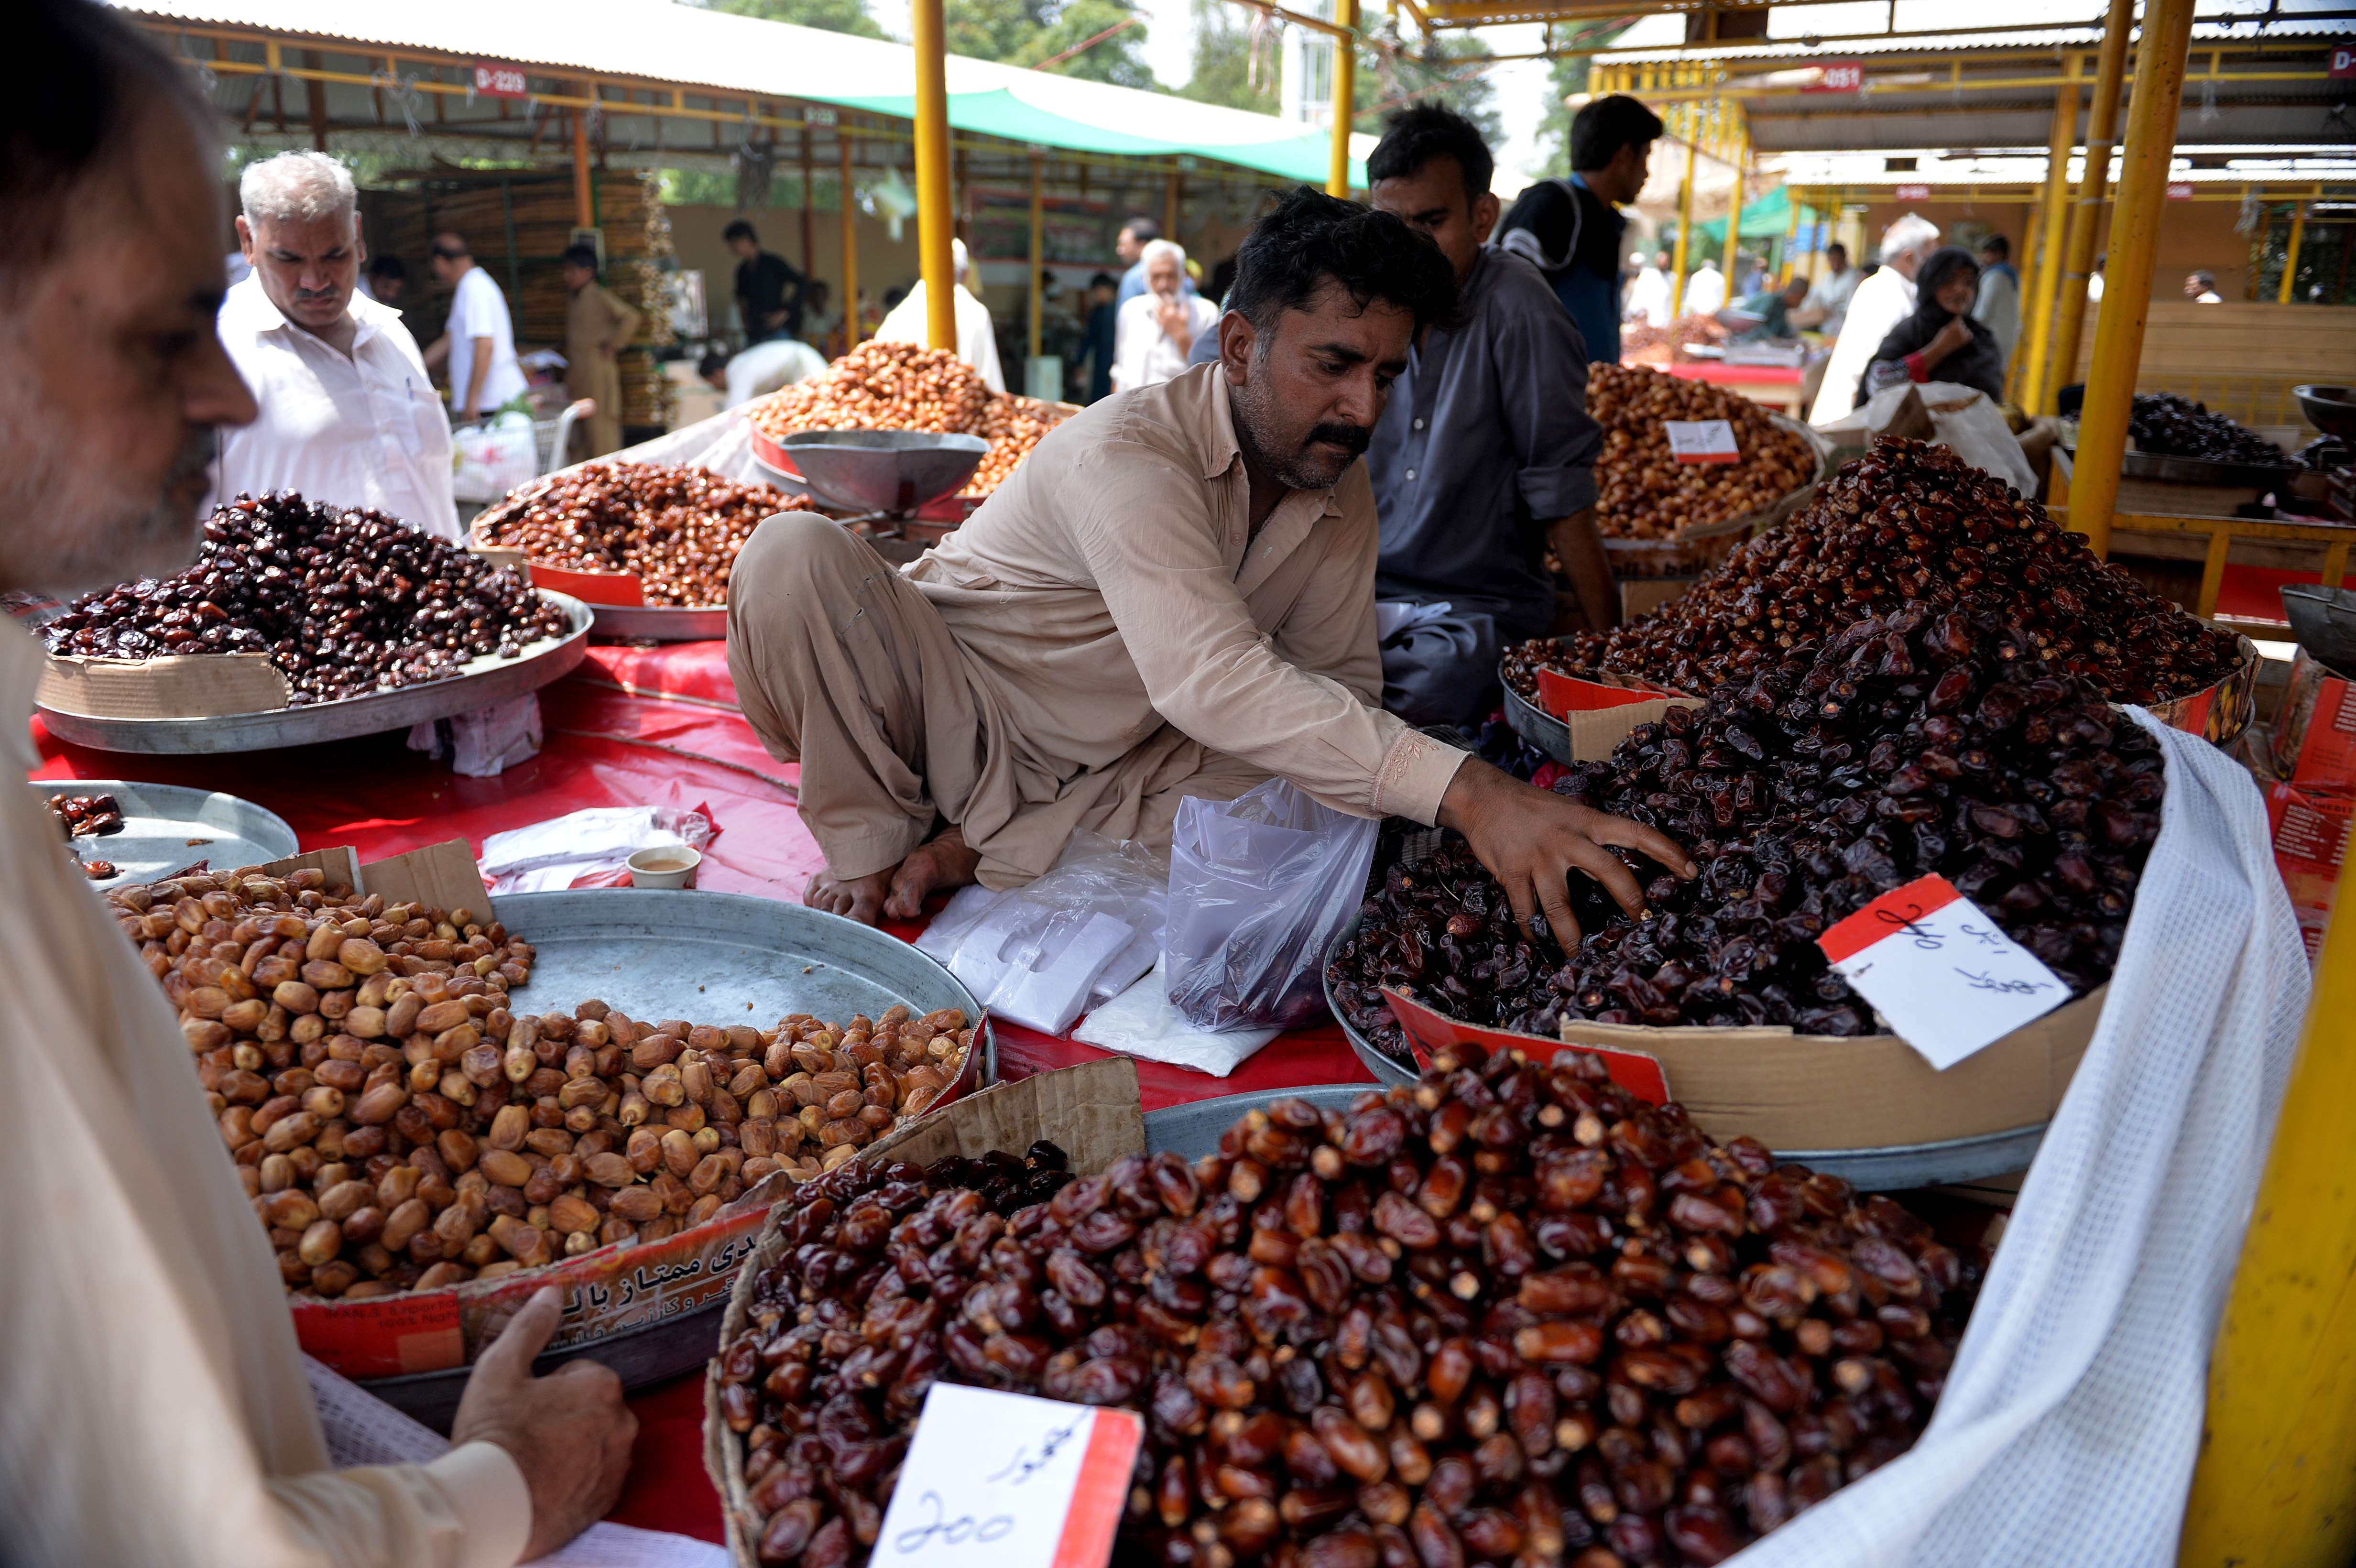 Pakistan celebrates holy month of Ramadan